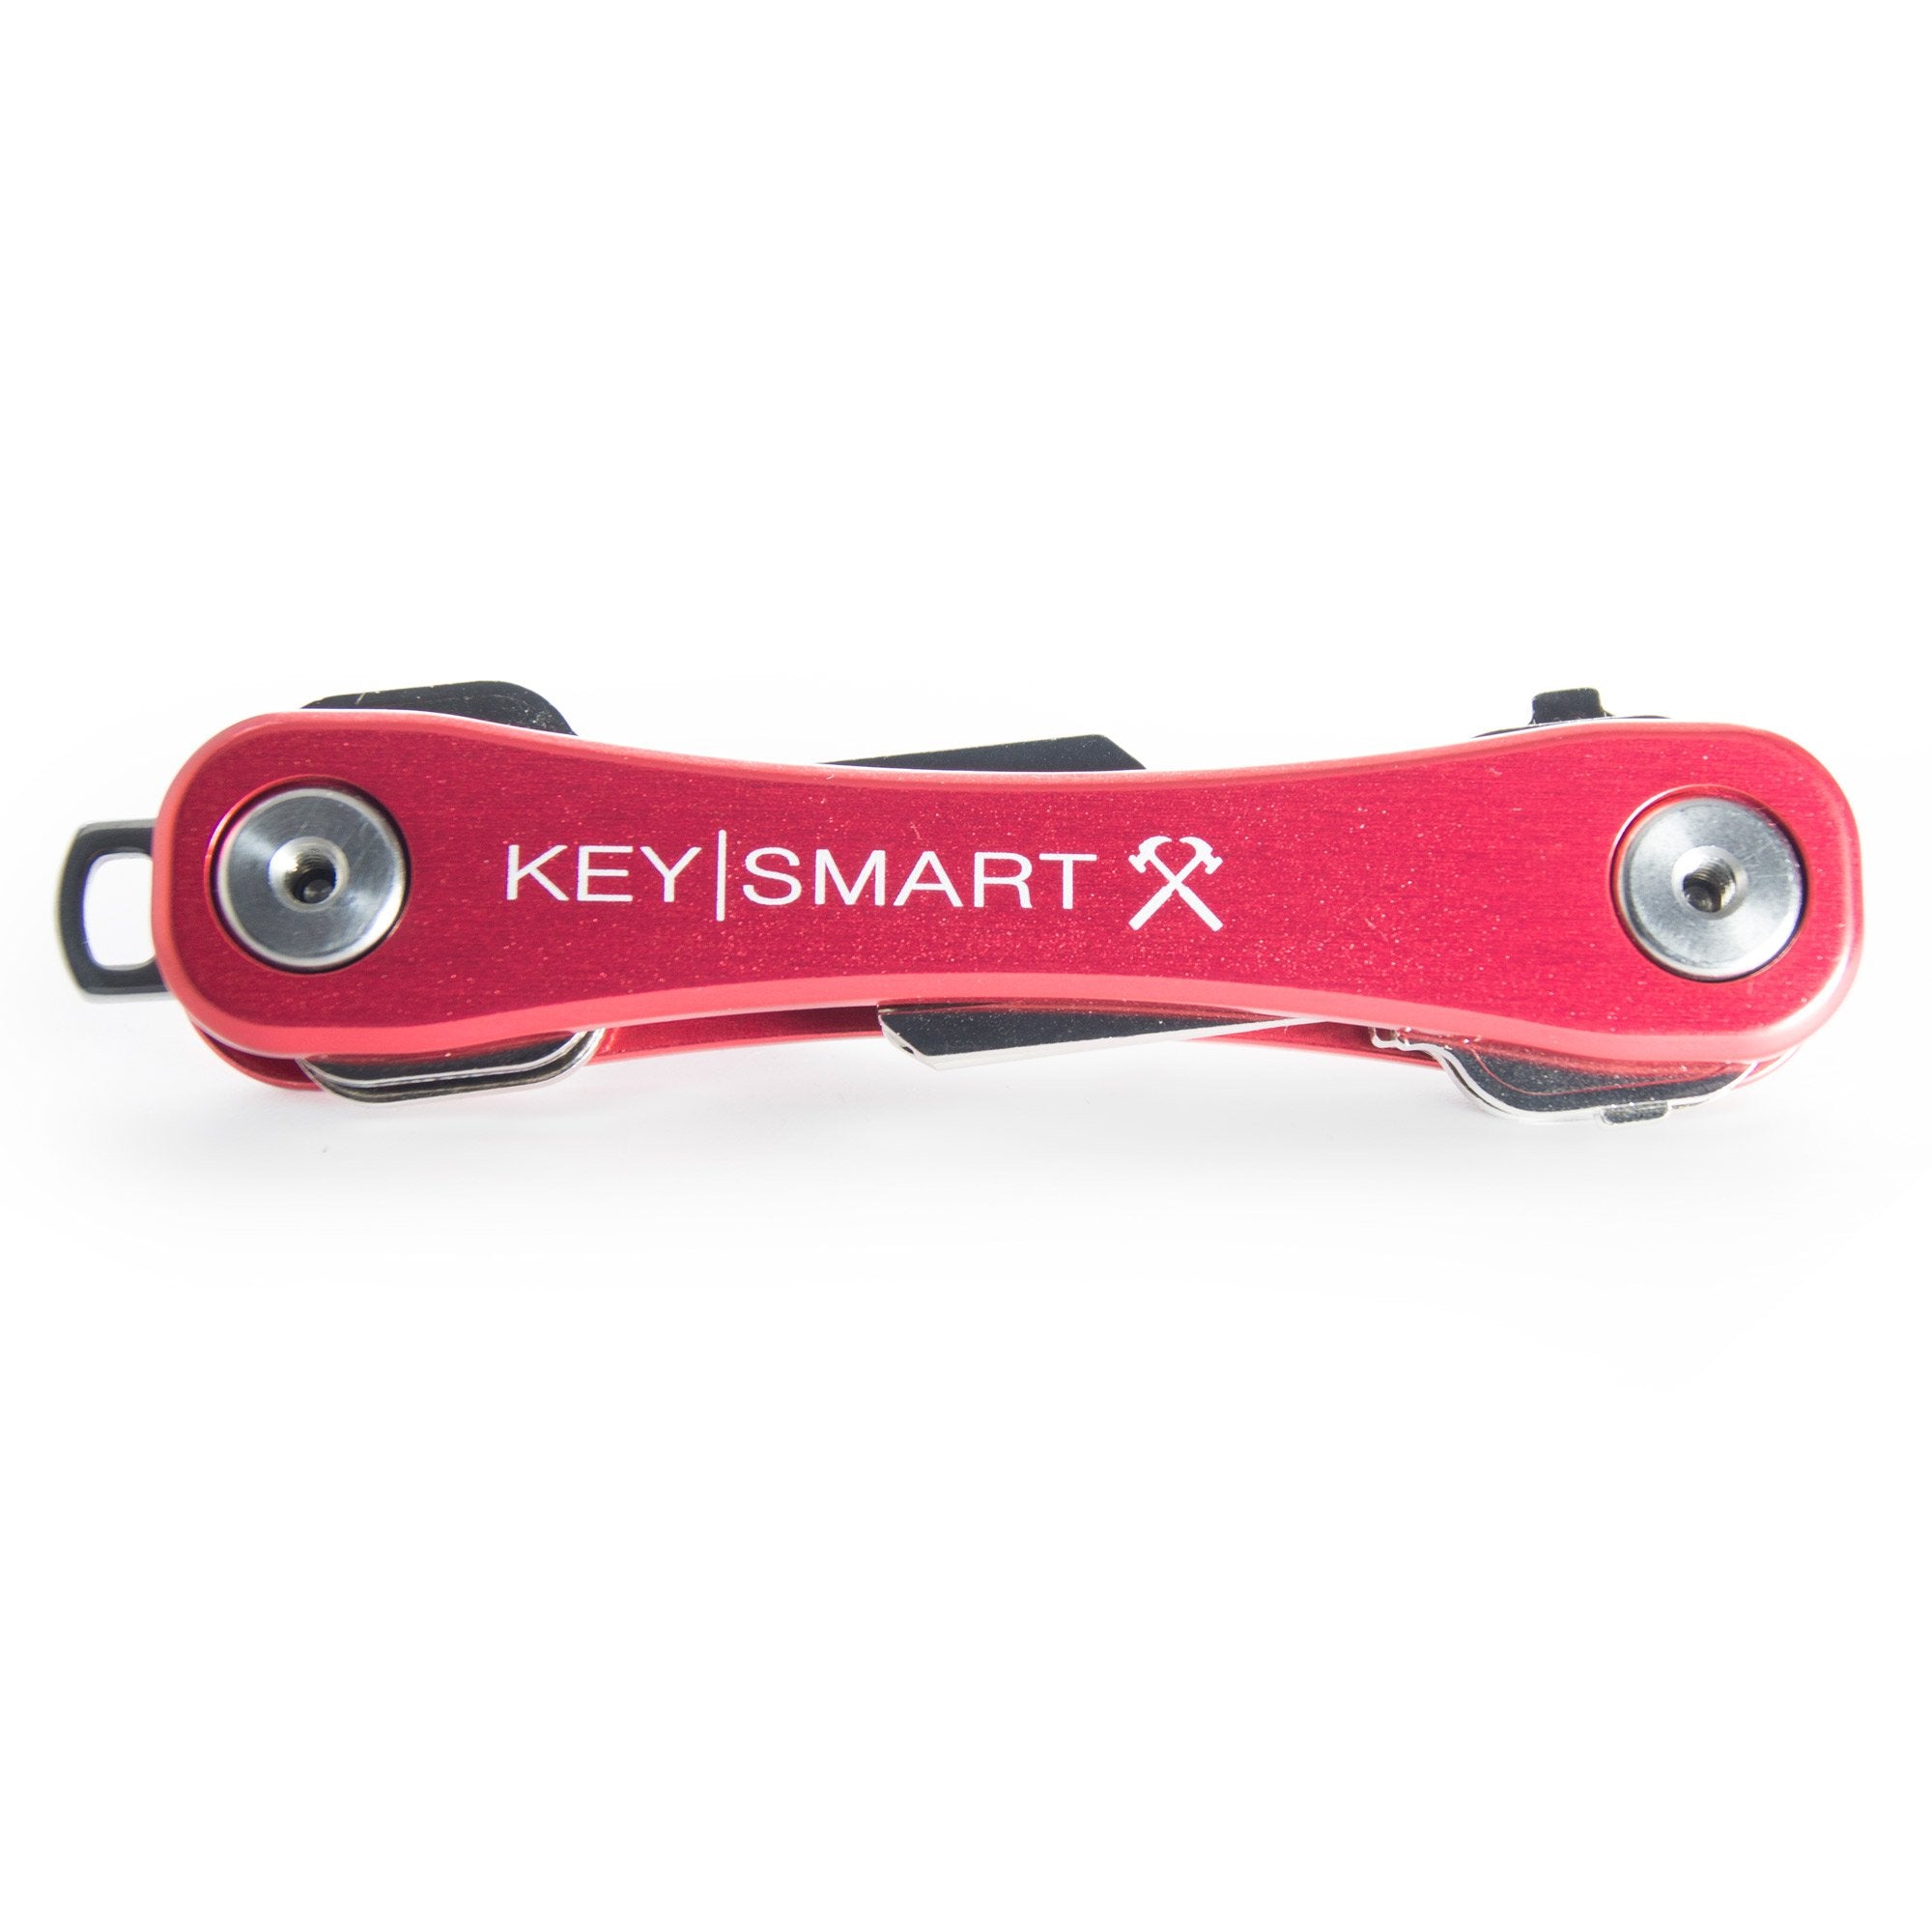 keysmart small compact key holder